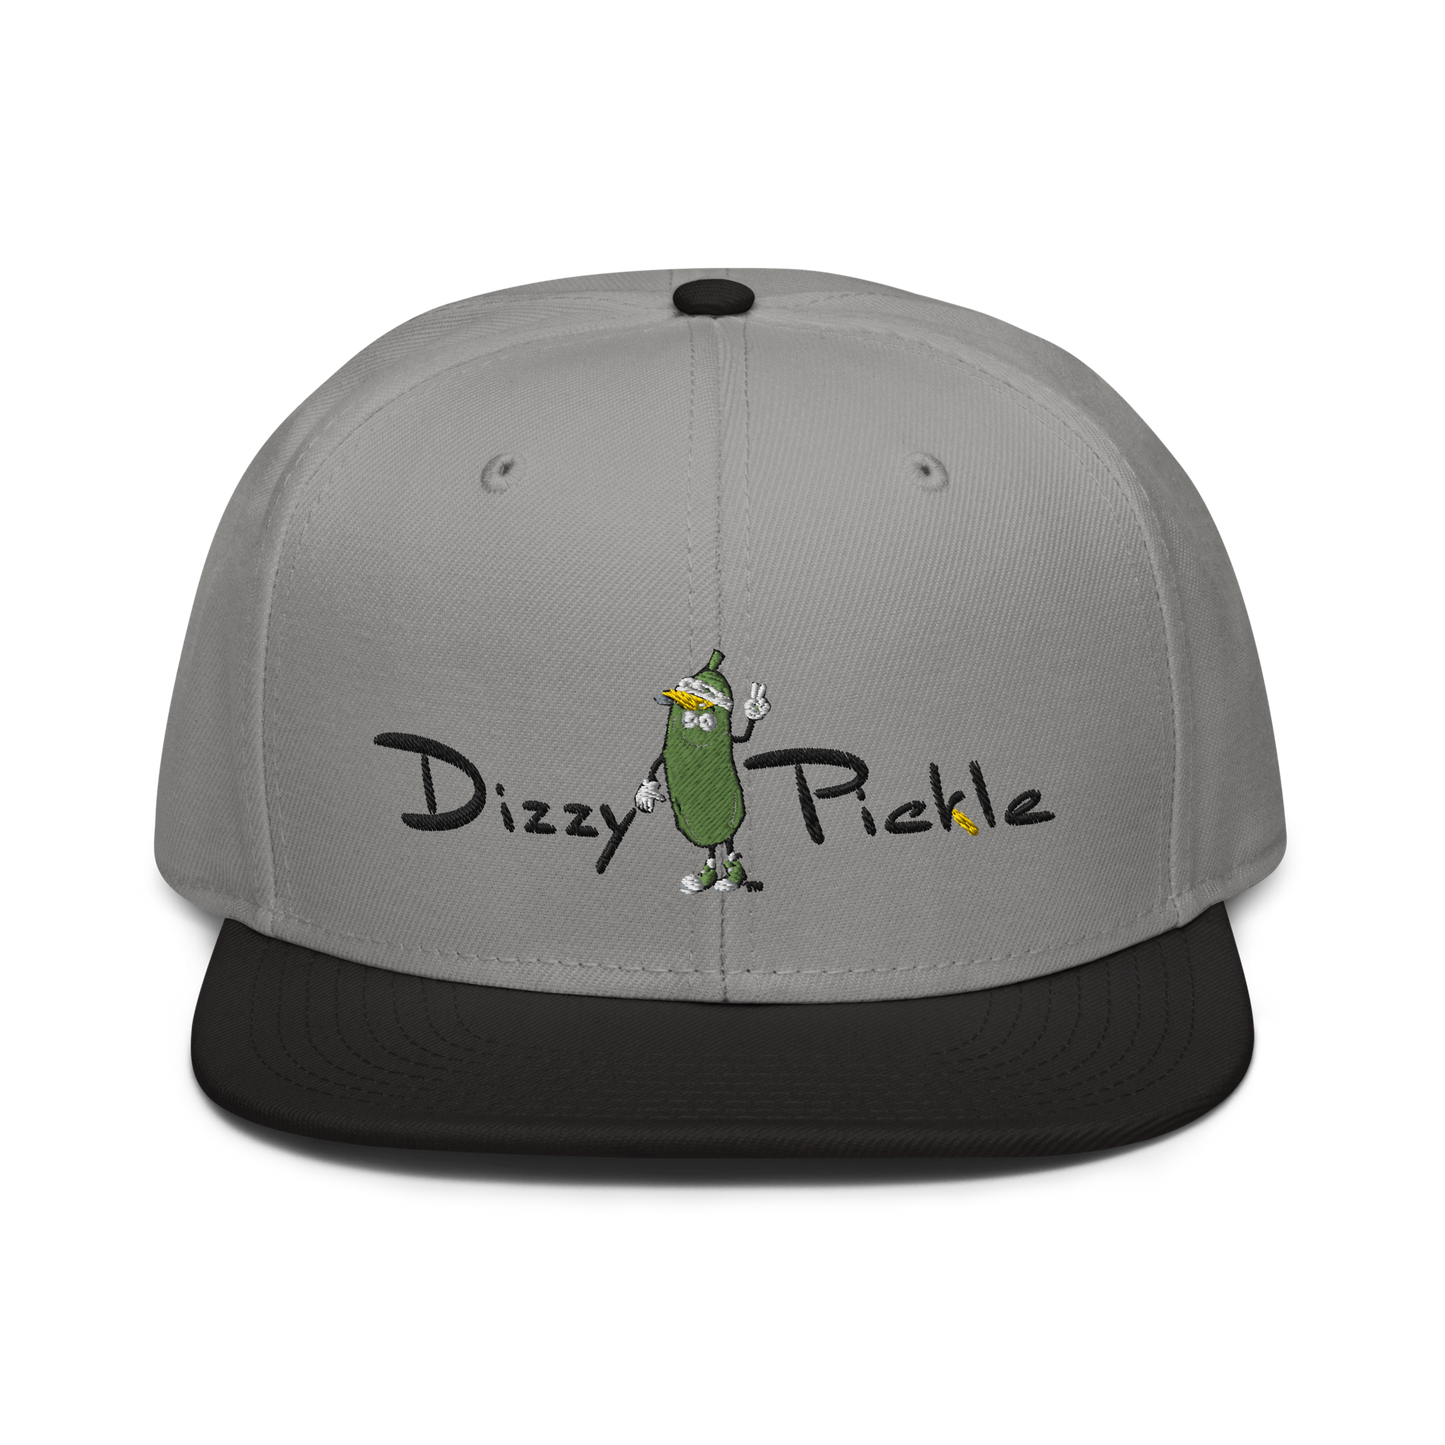 DZY P Classic - Snapback Hat by Dizzy Pickle v2